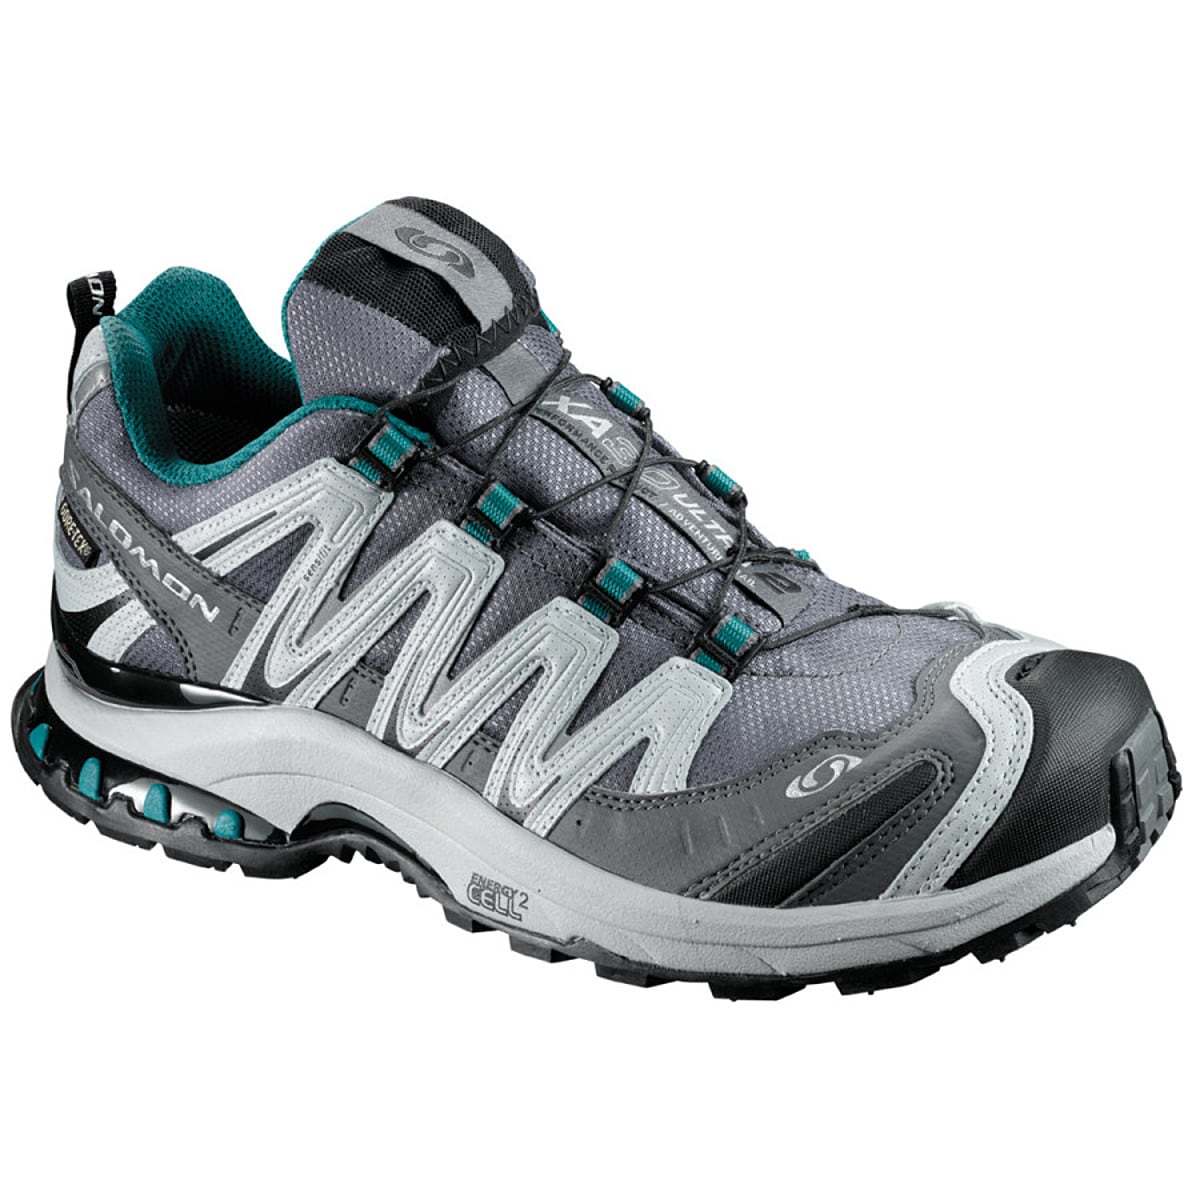 Pro 3D GTX 2 Trail Running - Women's - Footwear